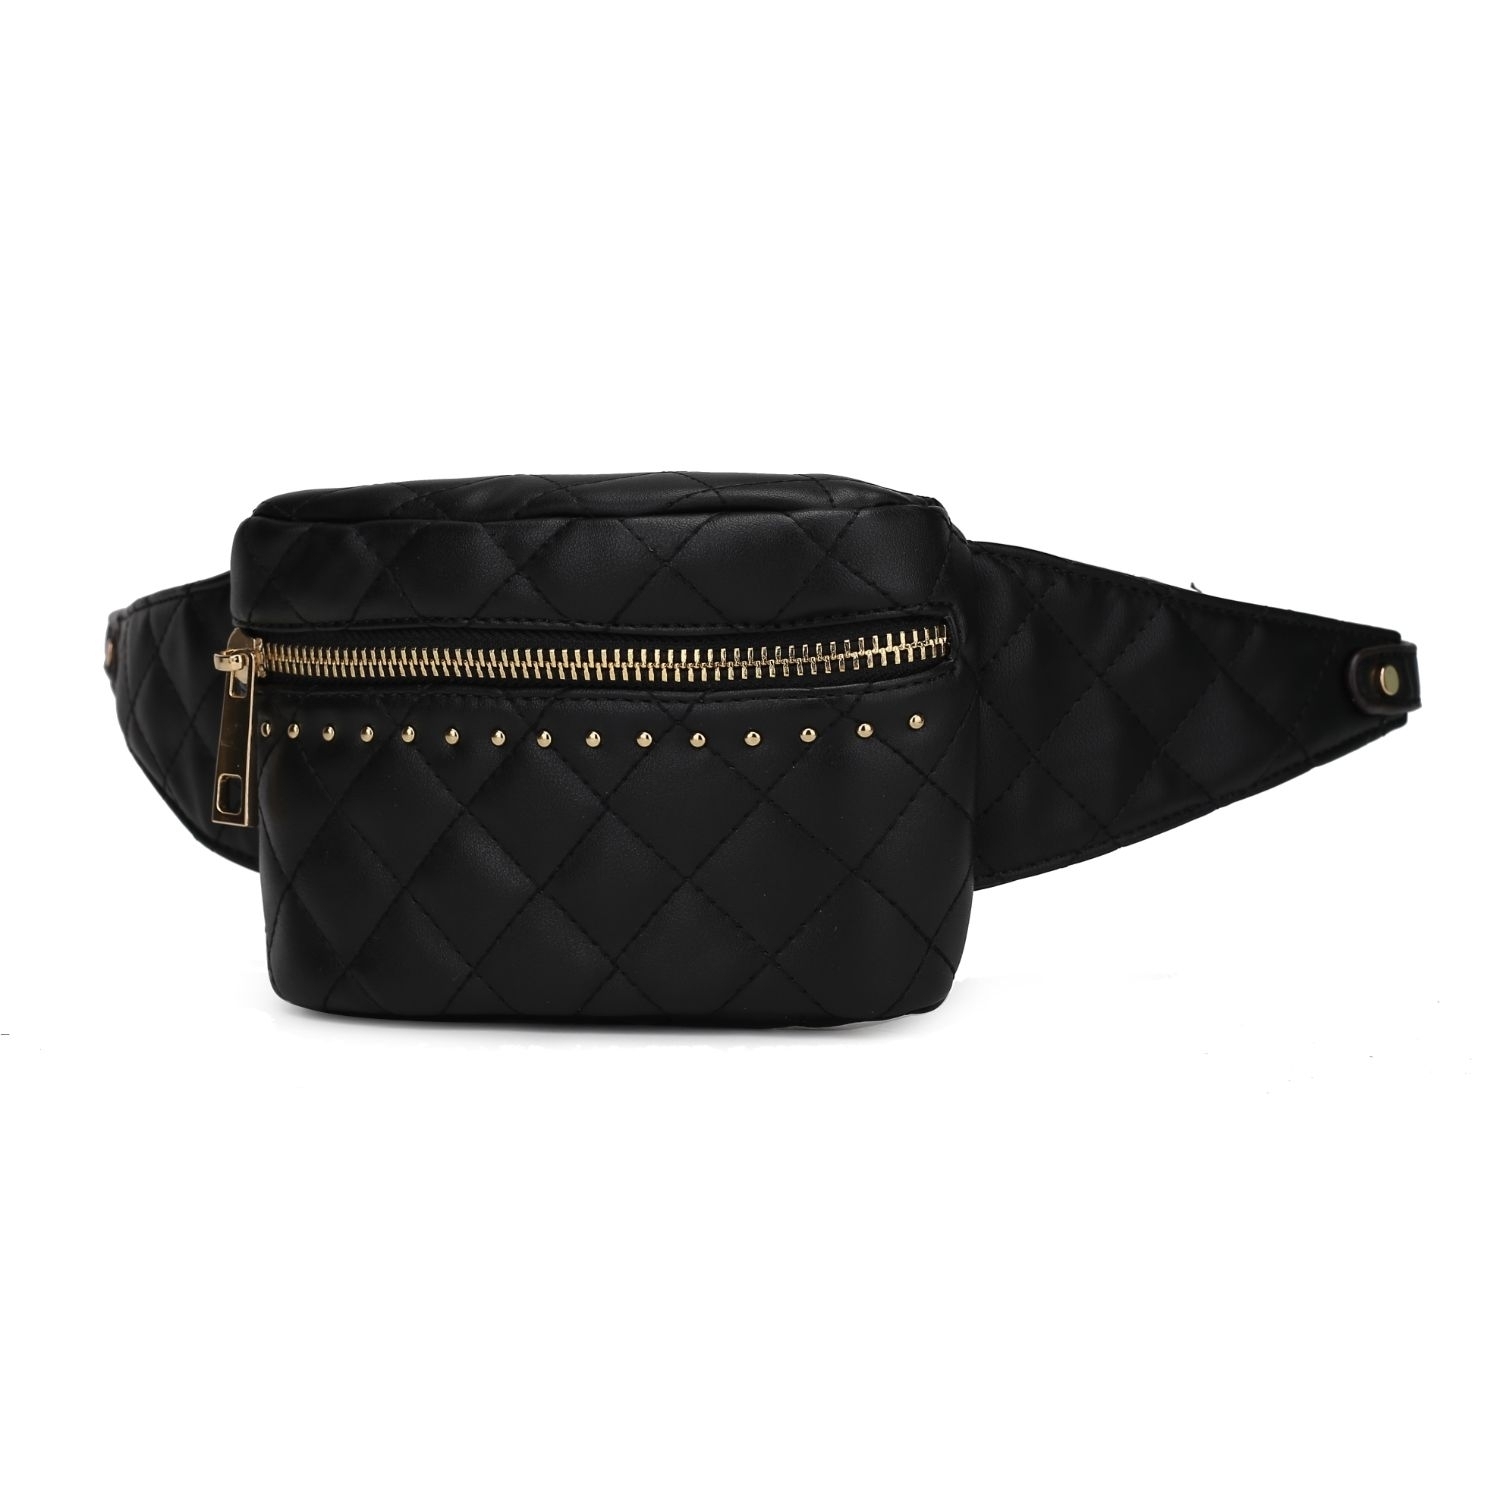 MKF Collection Camilla Quilted Belt Waist Handbag By Mia K. - Light Gray